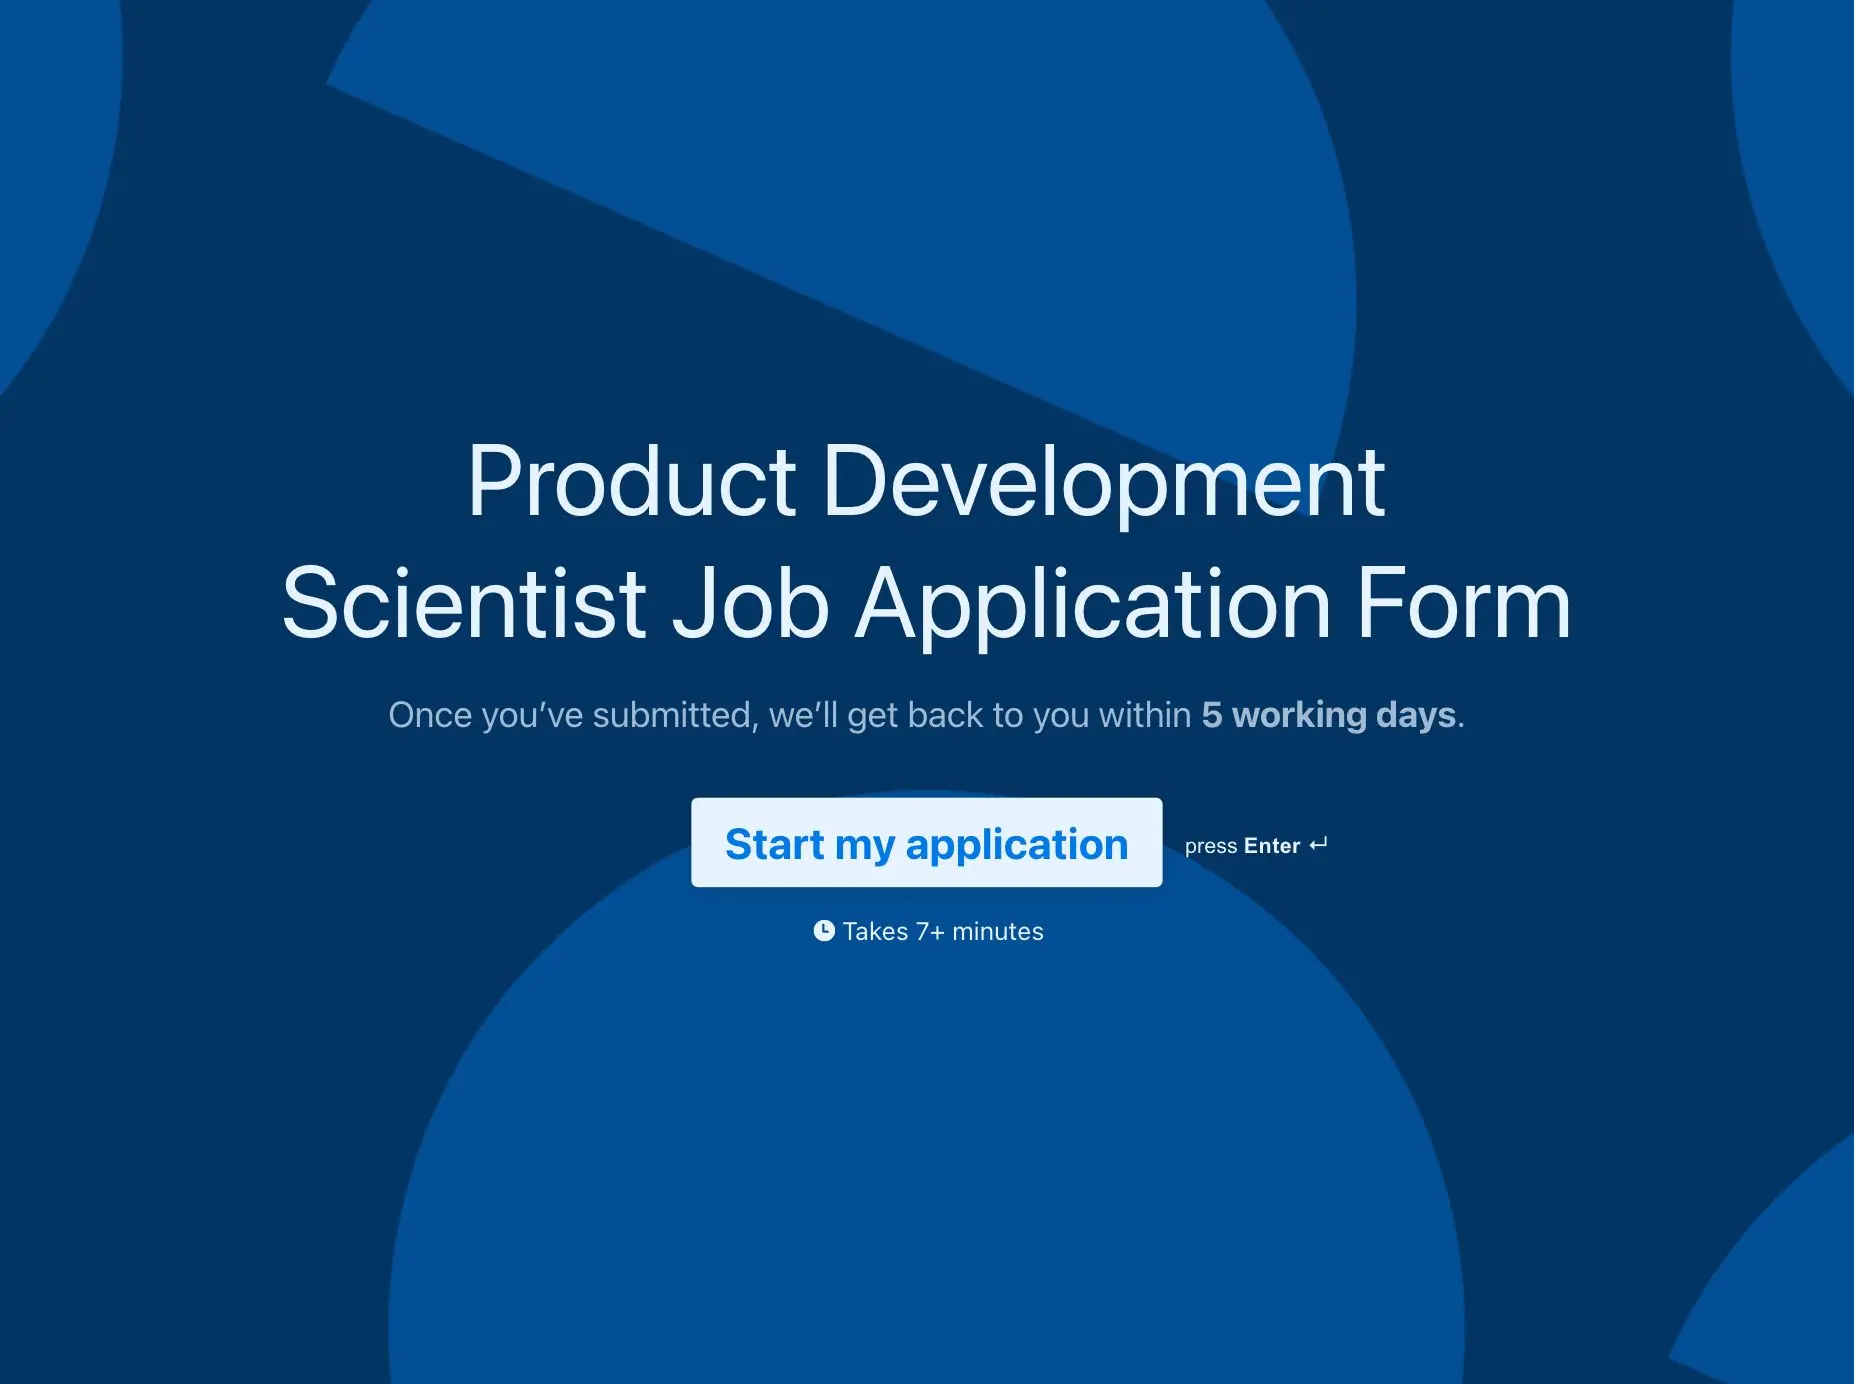 Product Development Scientist Job Application Form Template Hero